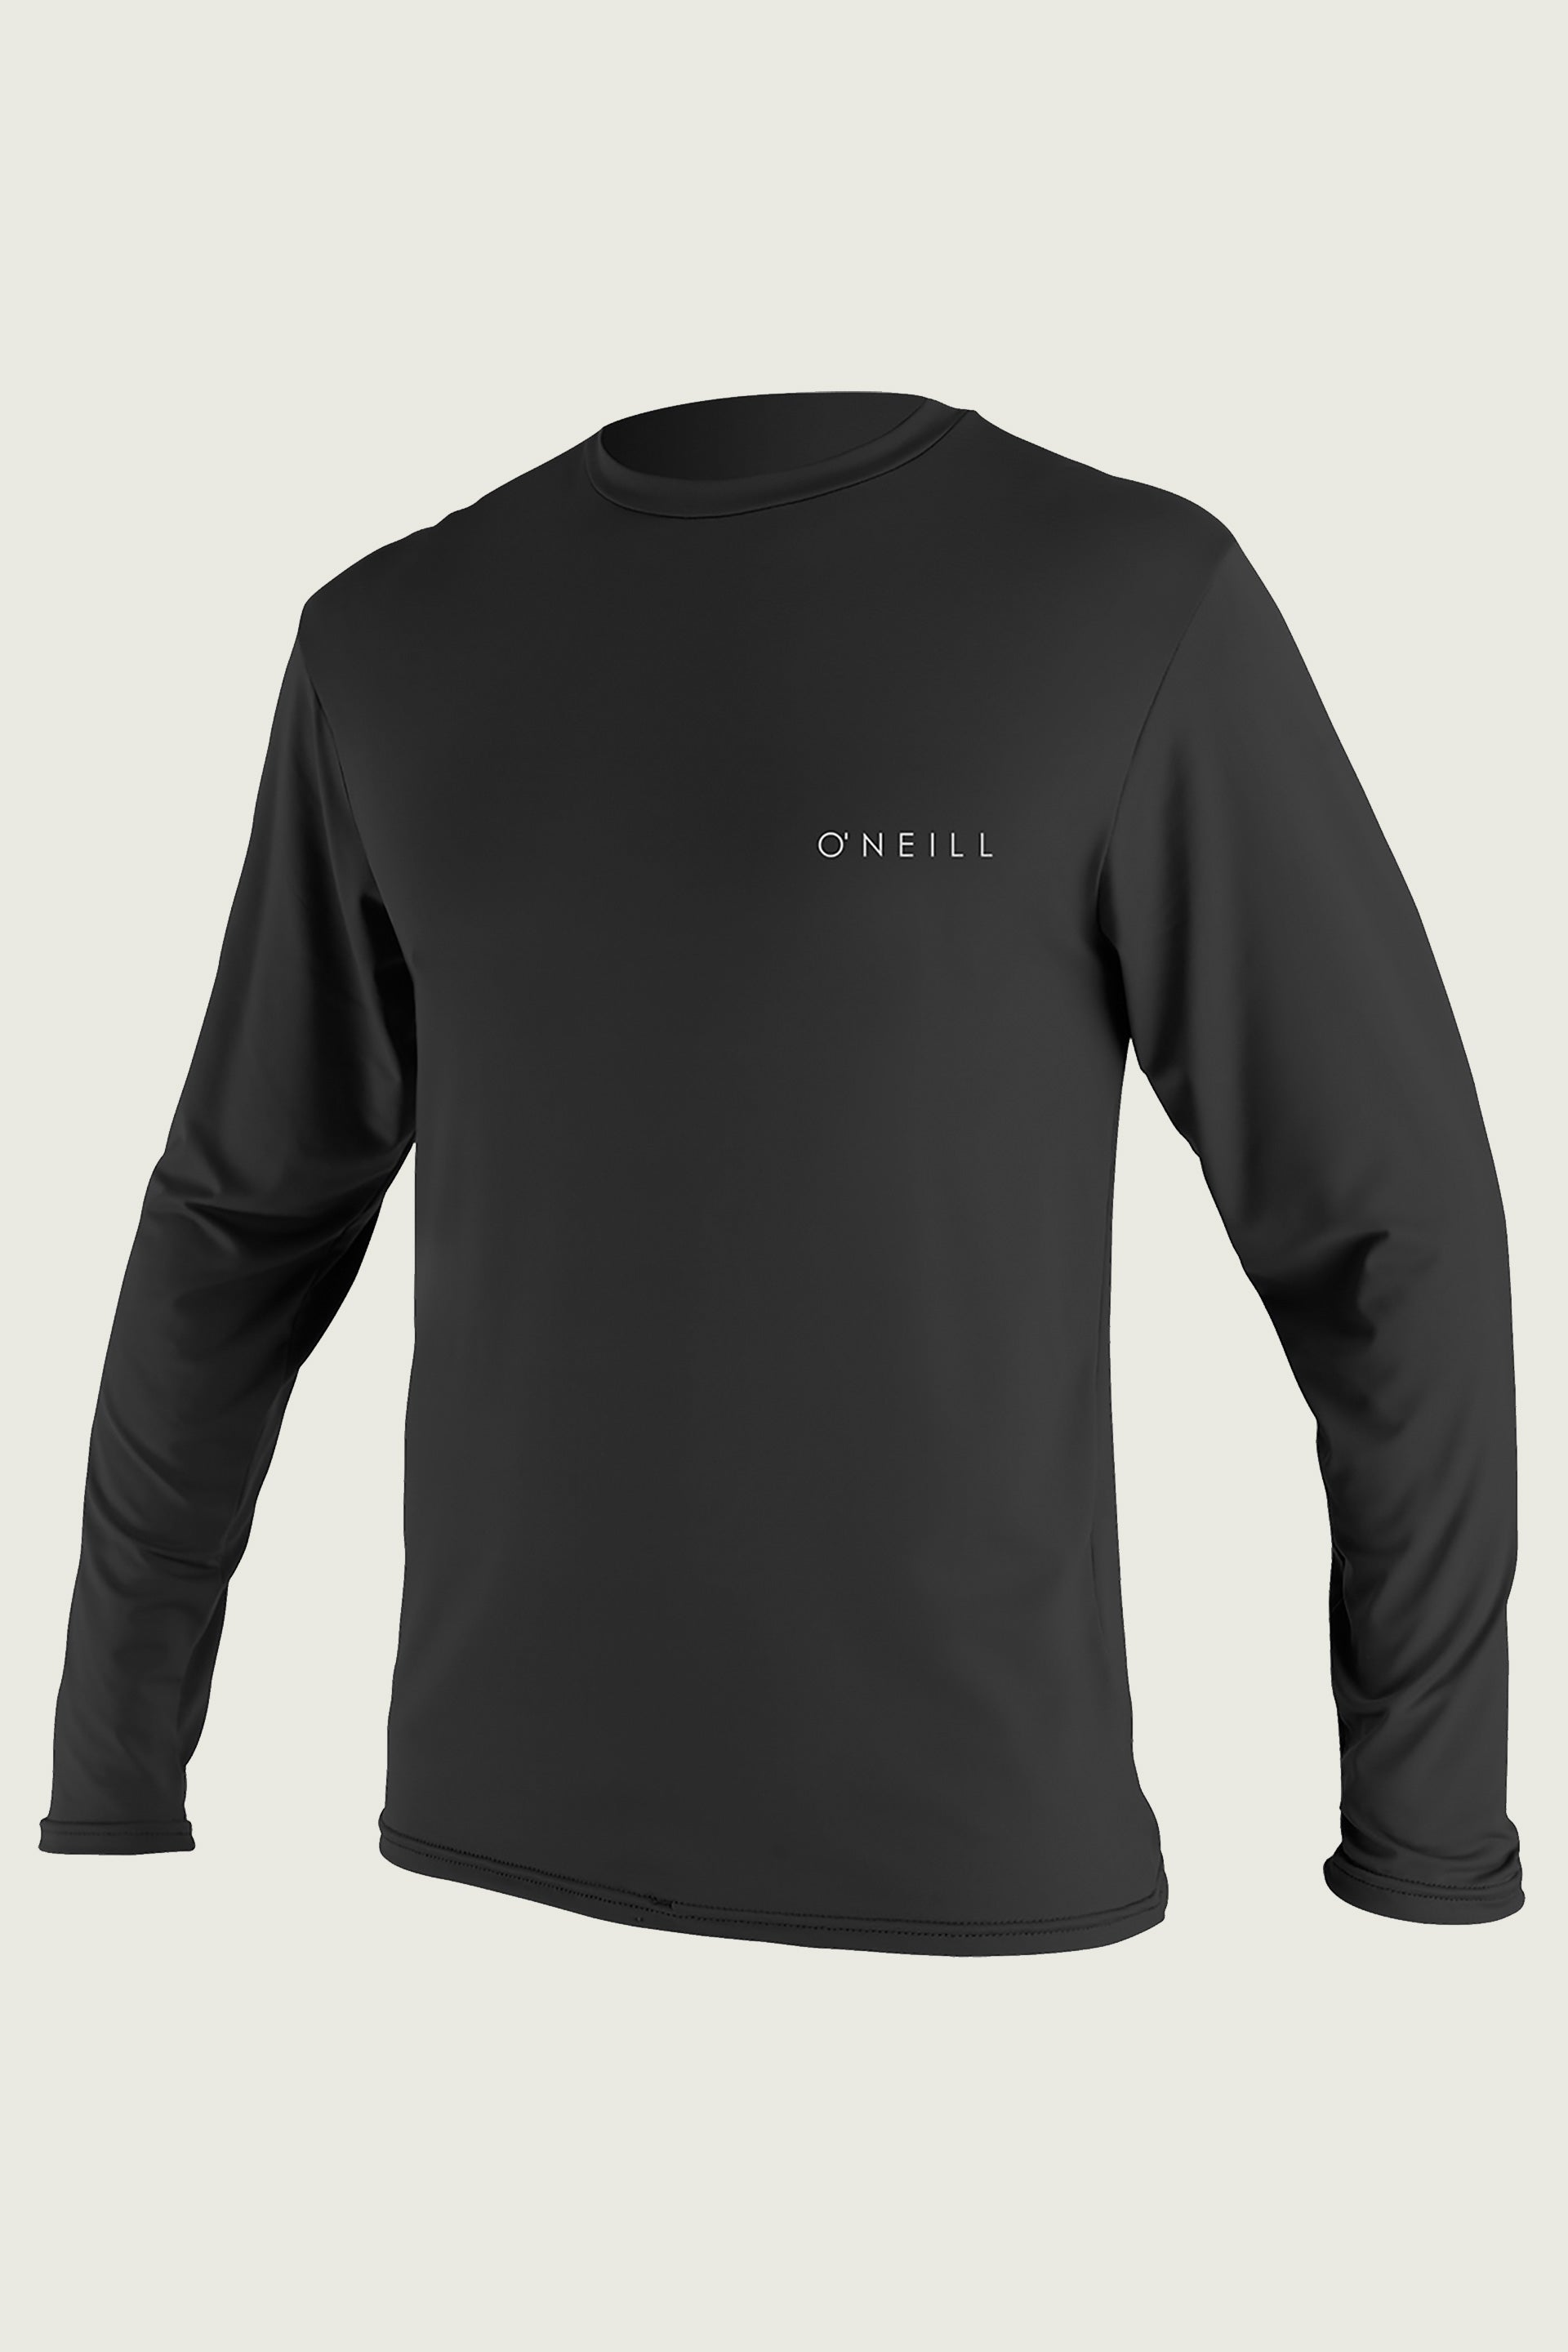 O'Neill Basic Skins 30+ Sun Long-Sleeve Shirt - Men's Black, XL